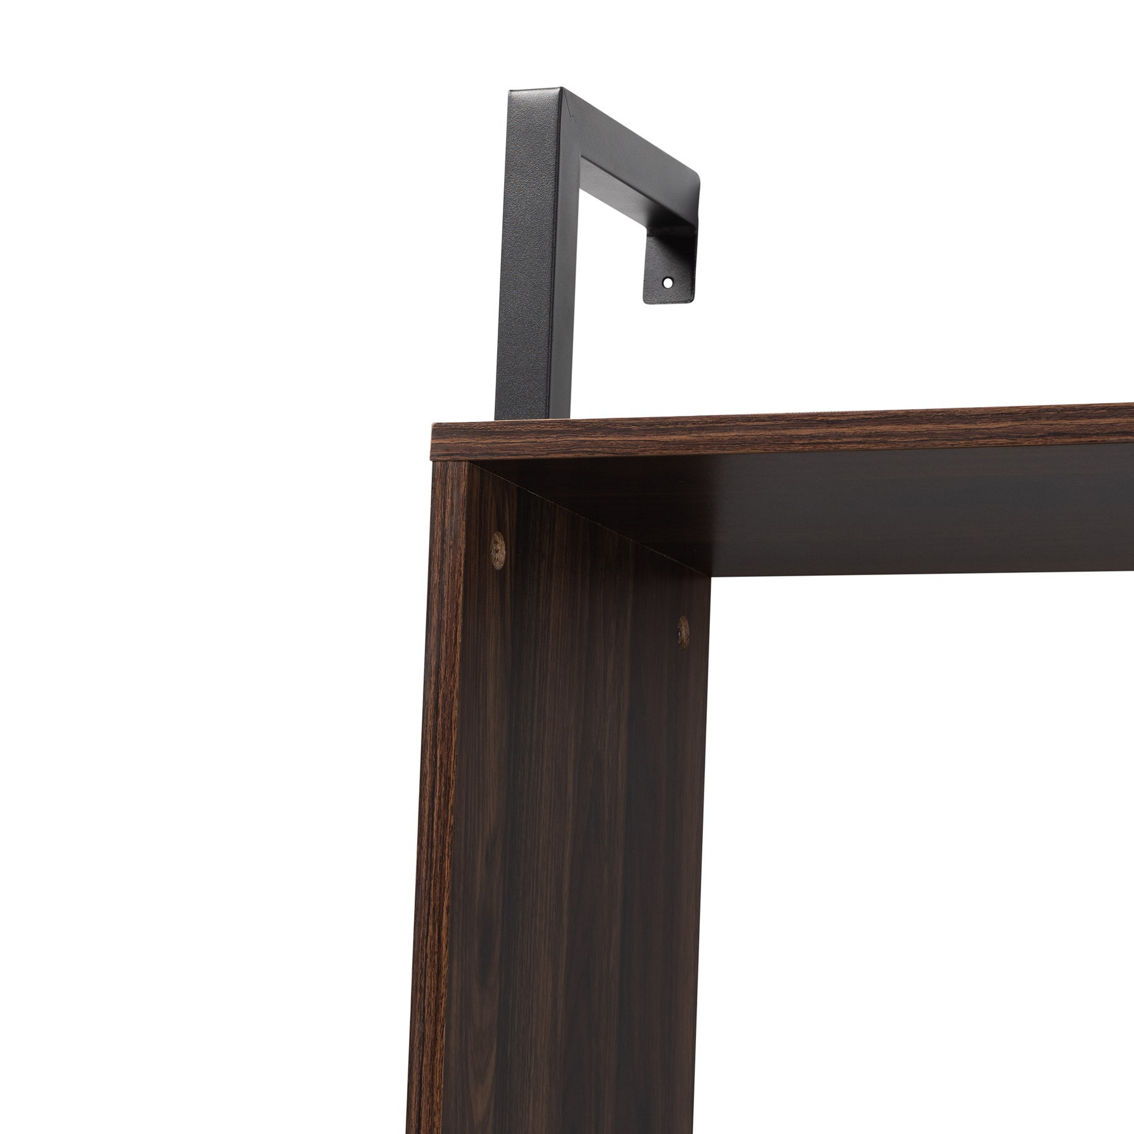 Baxton Studio Fariat Walnut Brown Wood and Black Metal Display Shelf with Desk - Image 4 of 5